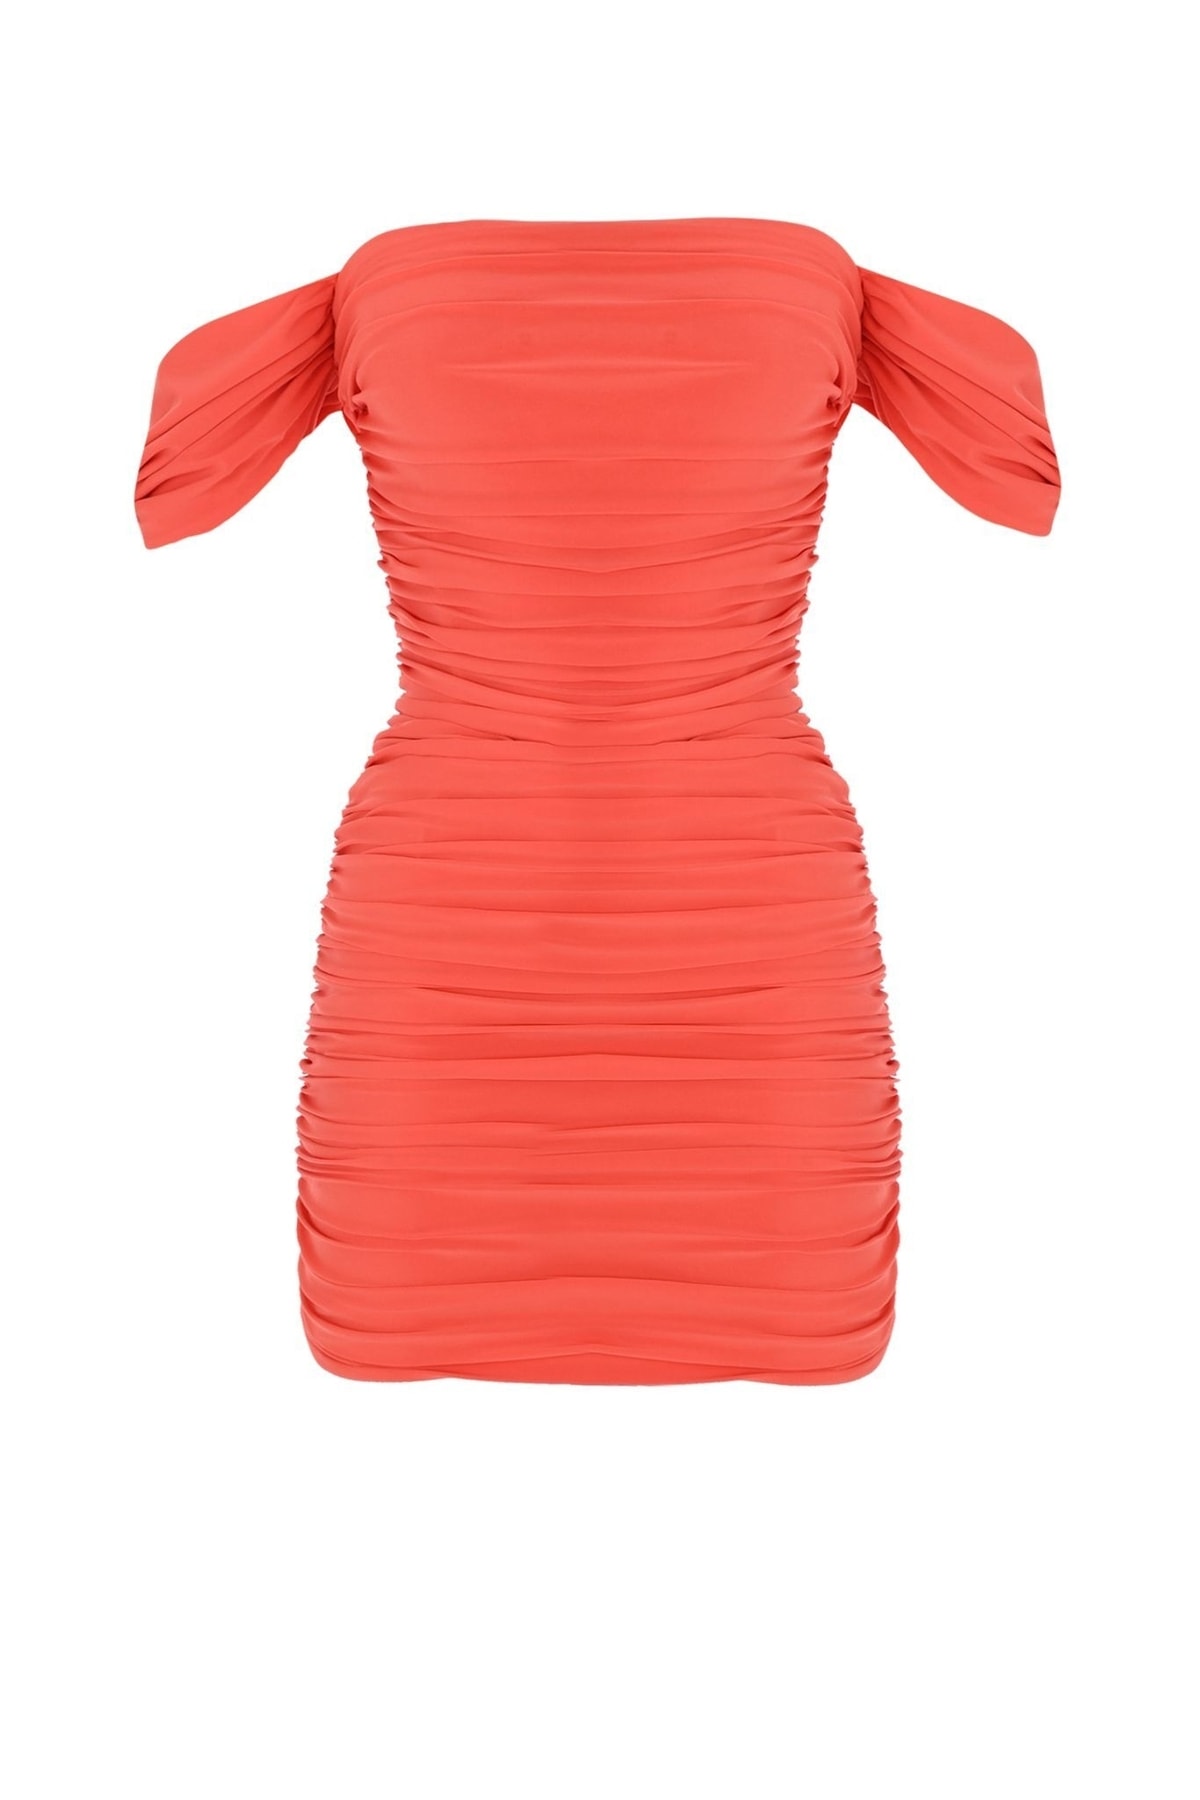 Whenever Company Kleid Orange Bodycon Fast ausverkauft